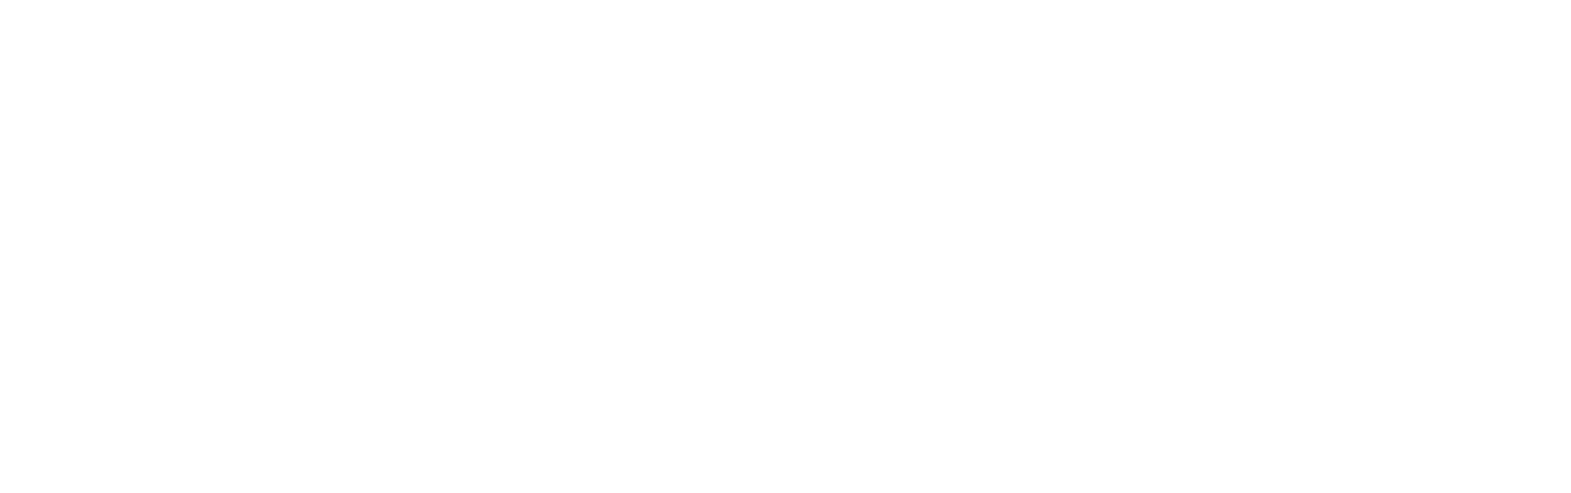 KYORIN Pharmaceutical logo large for dark backgrounds (transparent PNG)